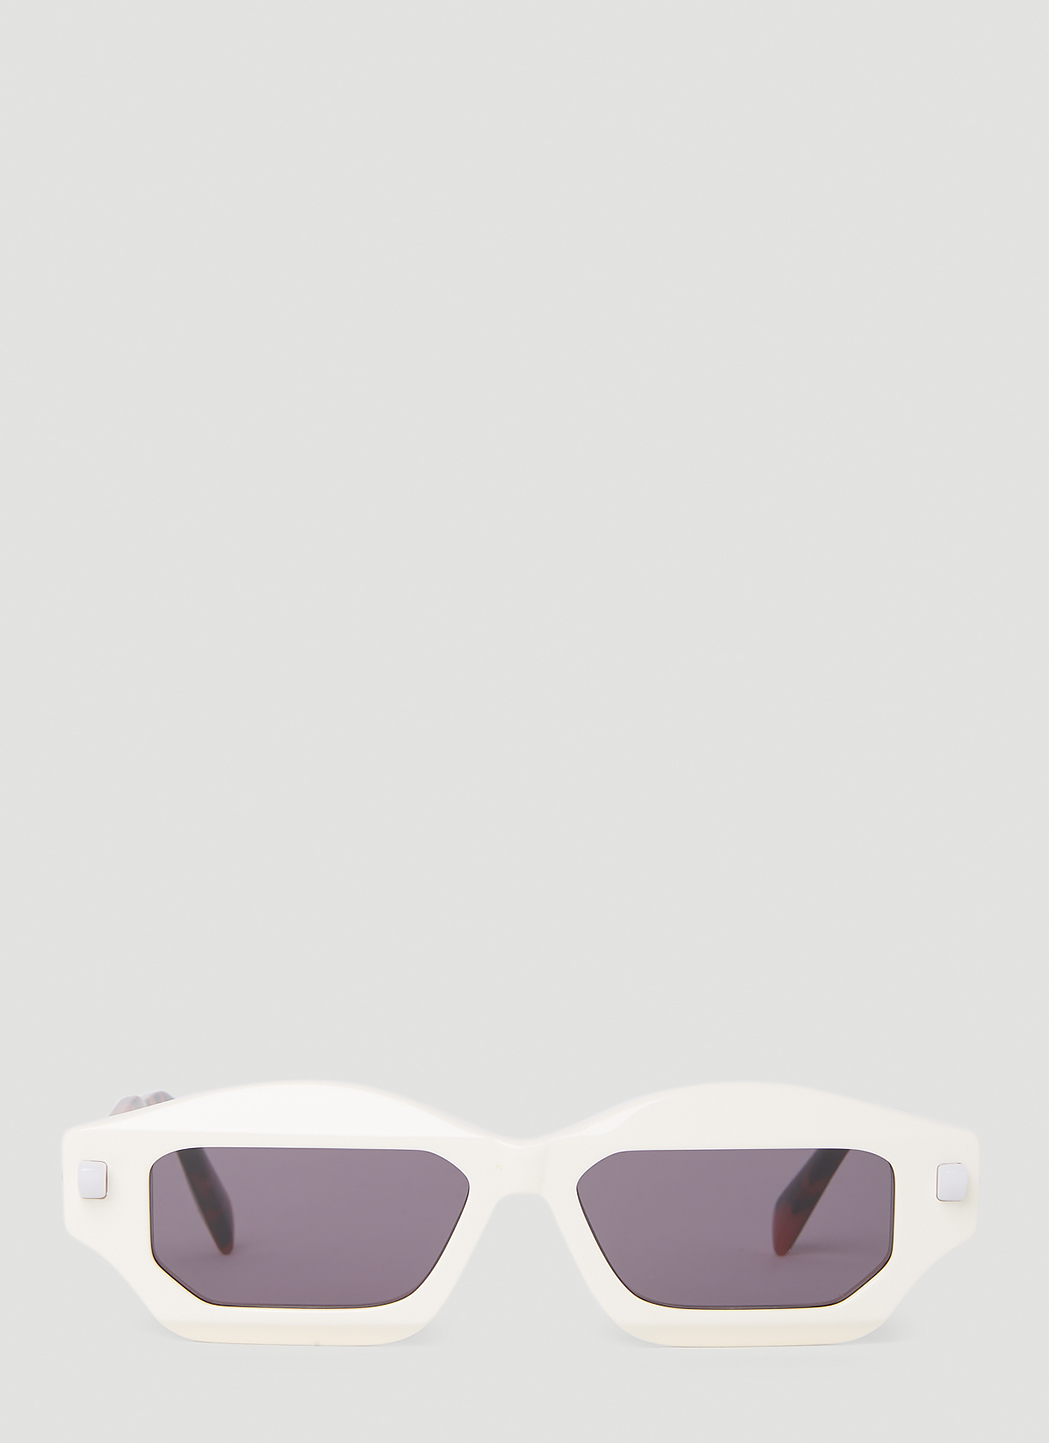 Q6 Sunglasses